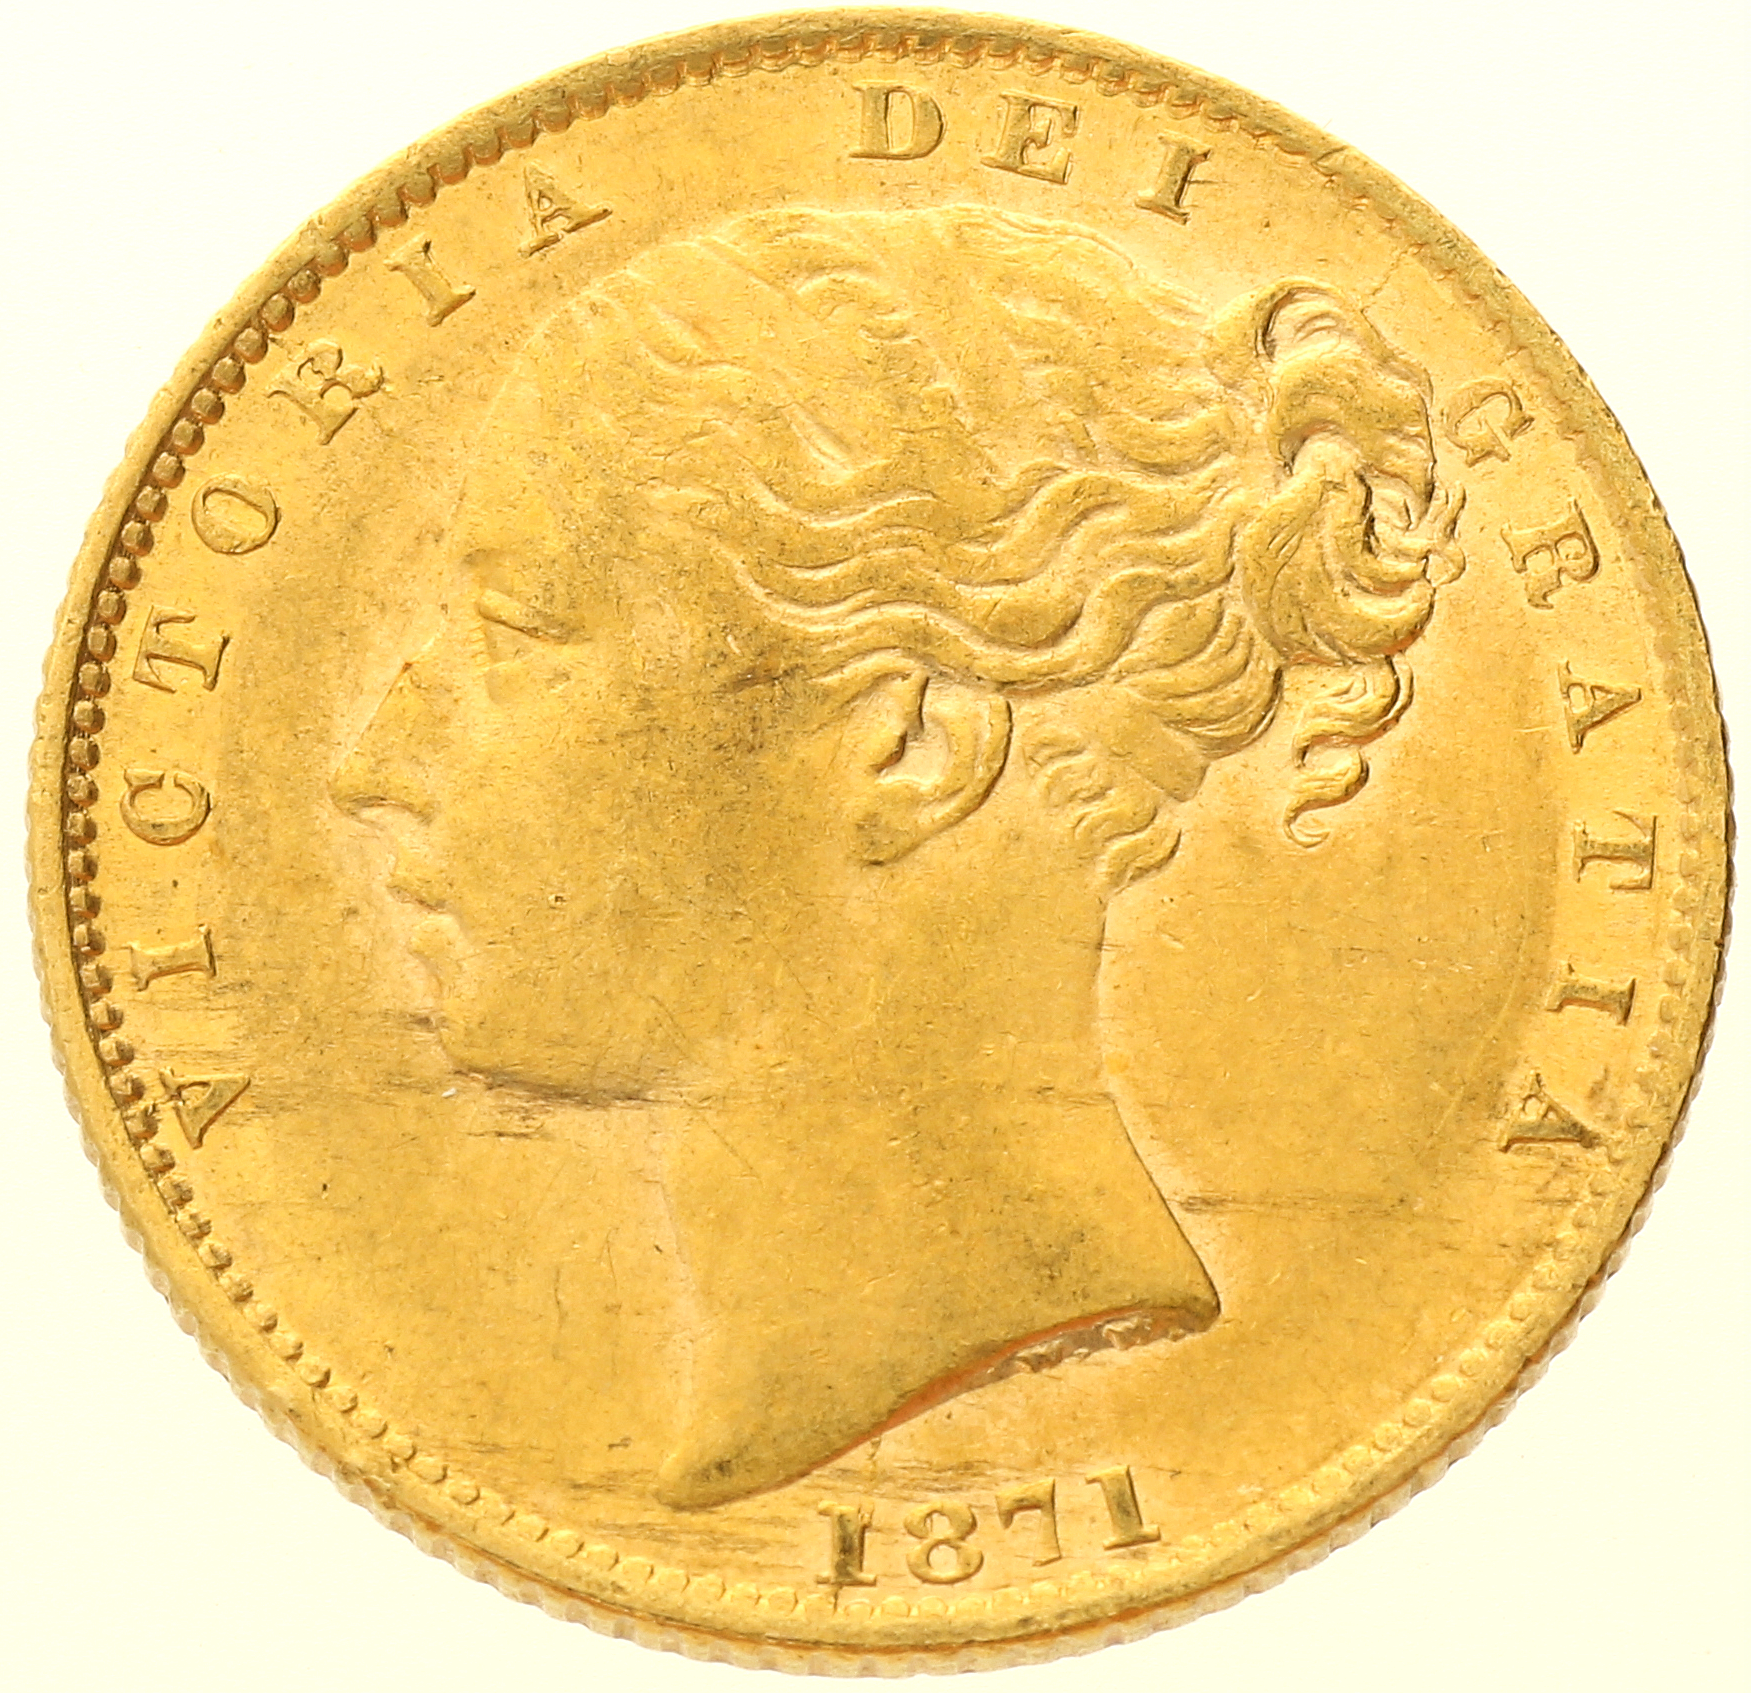 United Kingdom - 1 sovereign - 1871 - Victoria